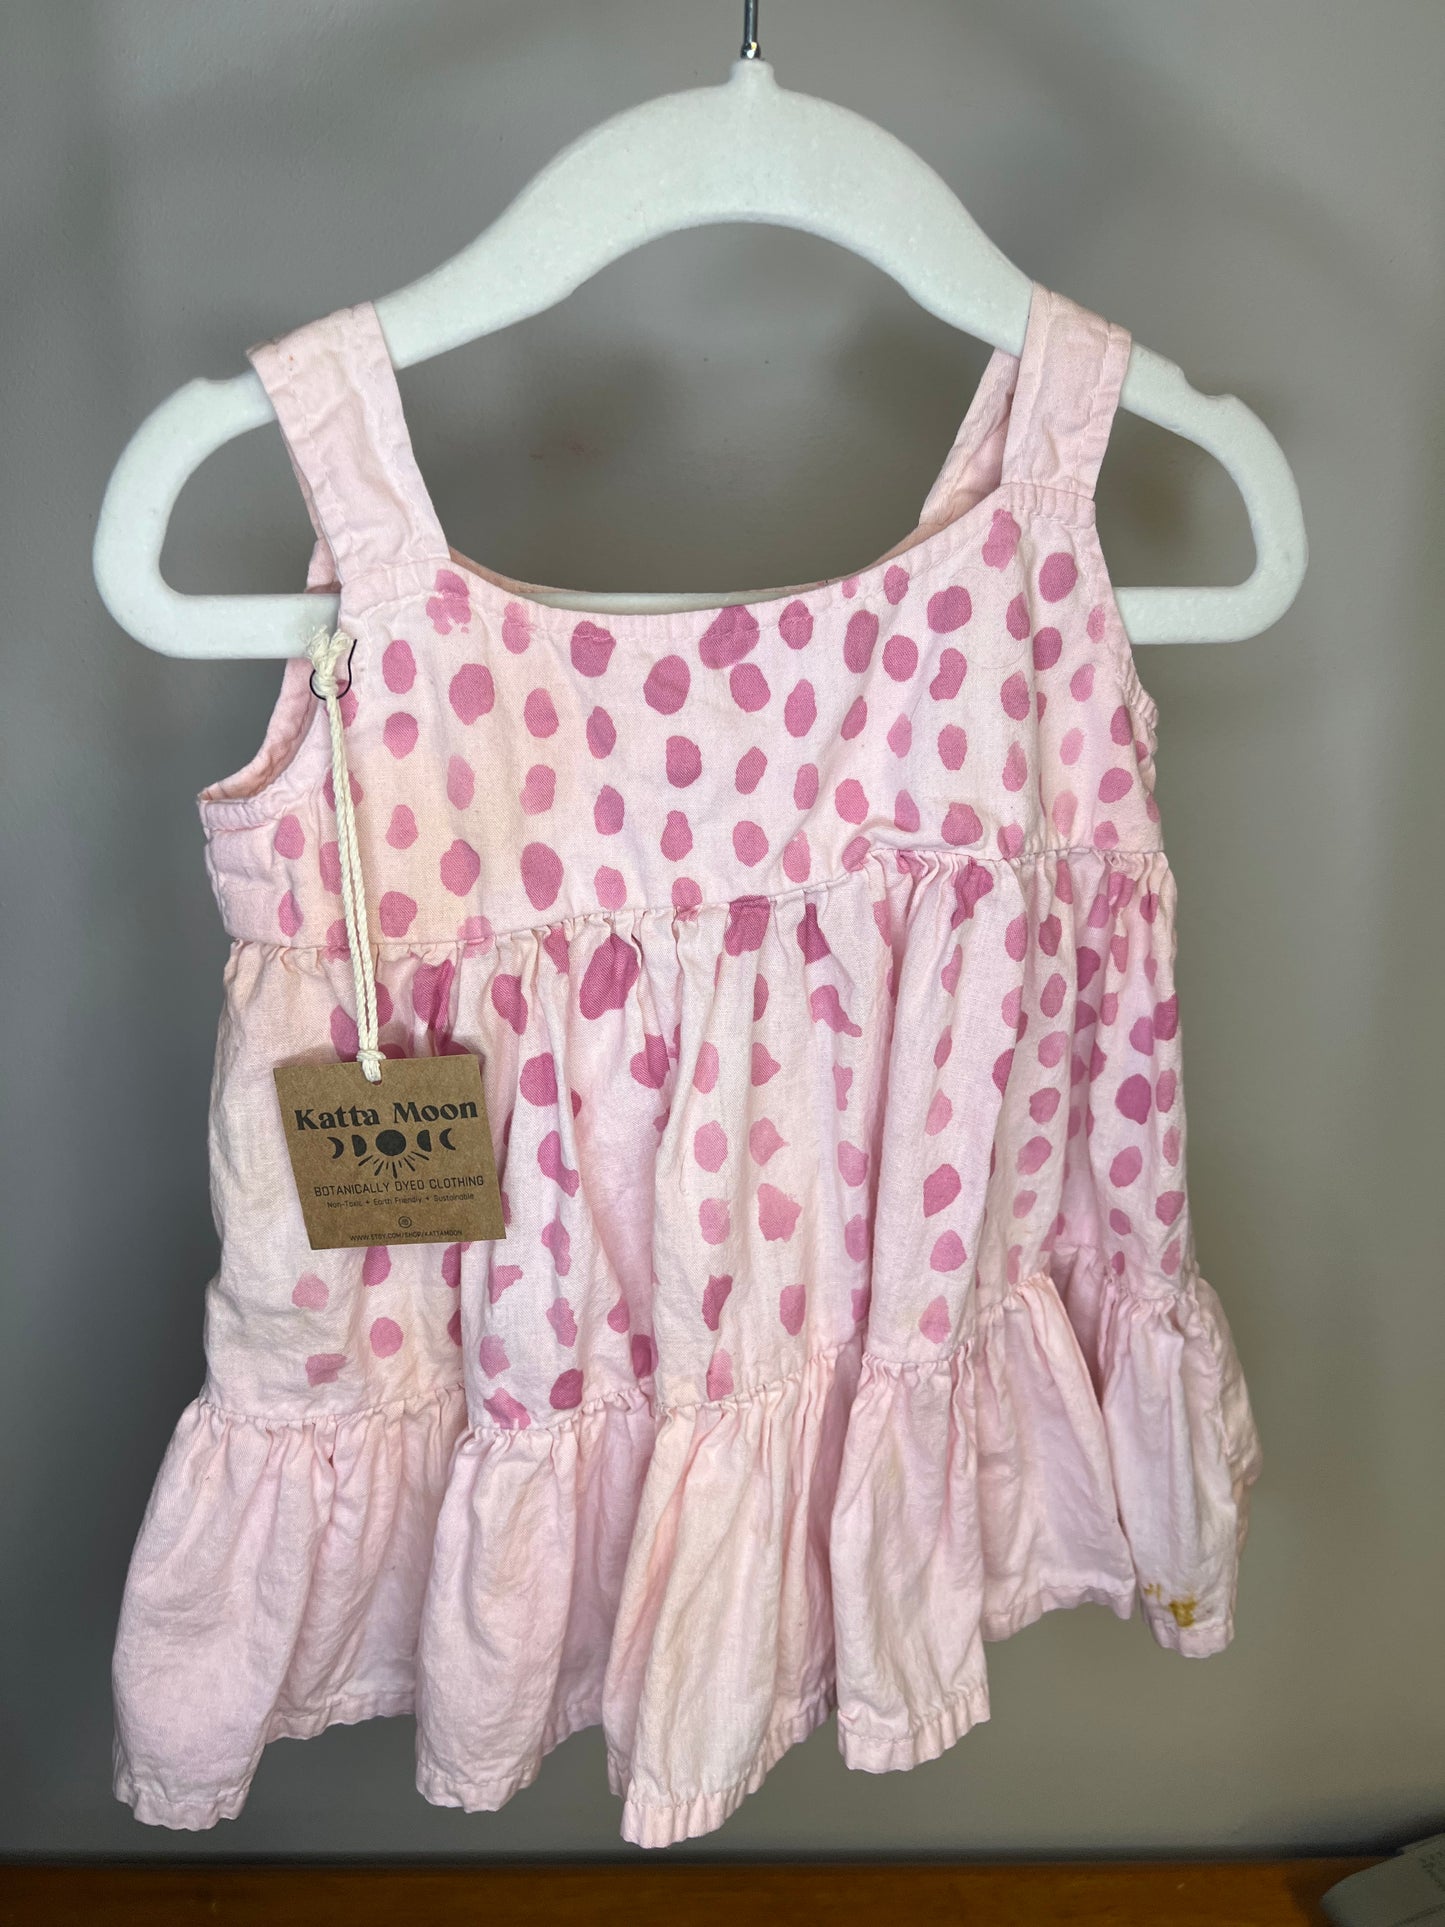 Katta Moon - Baby / Toddler Dress